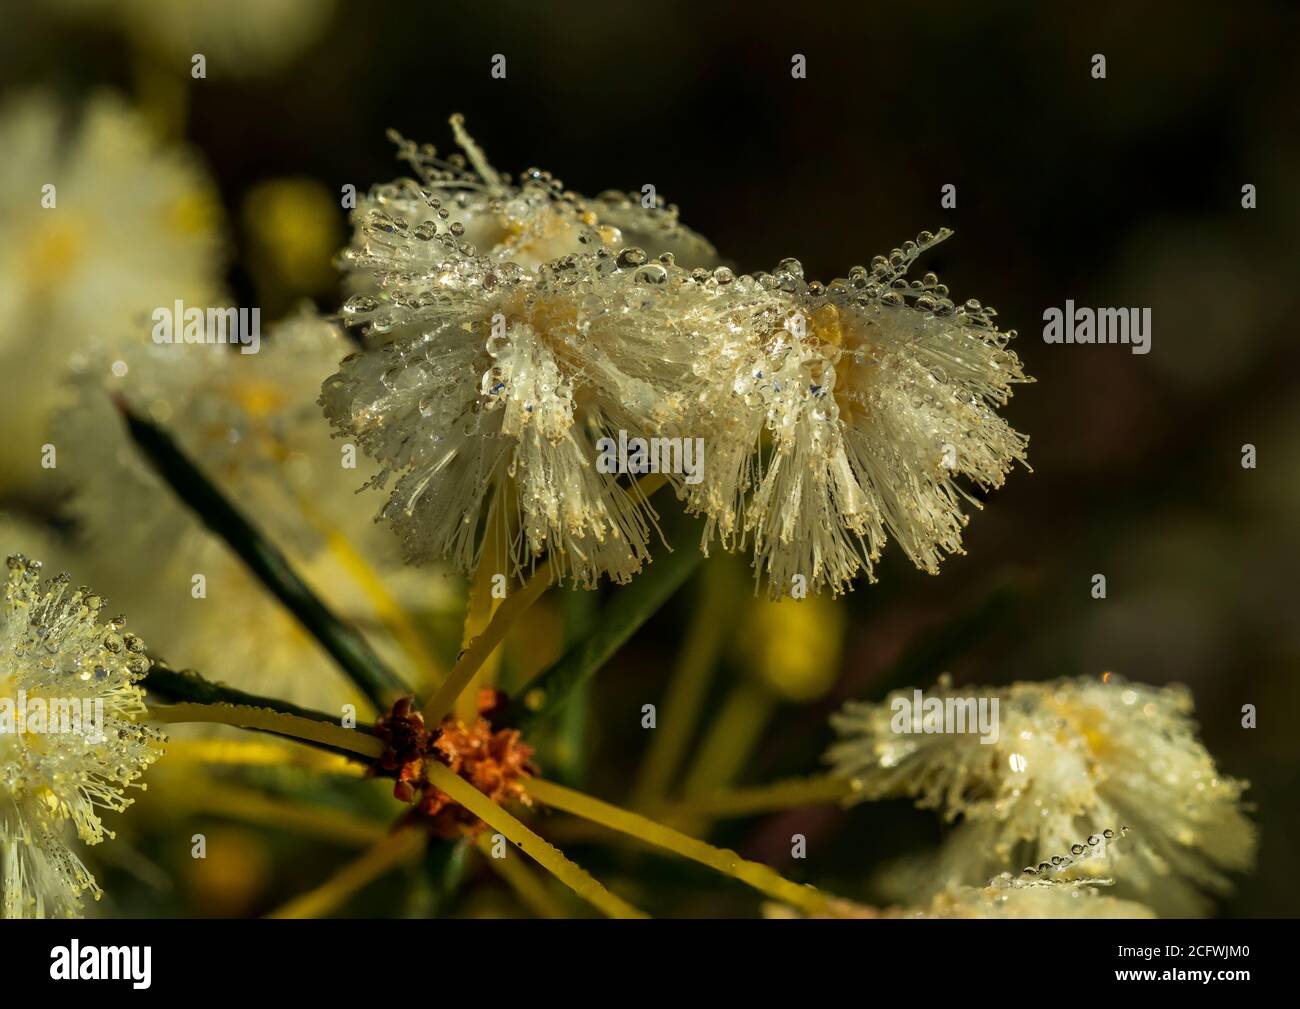 Yellow flowers of the Spreading Wattle shrub (Acacia genistifolia) after rain. Stock Photo